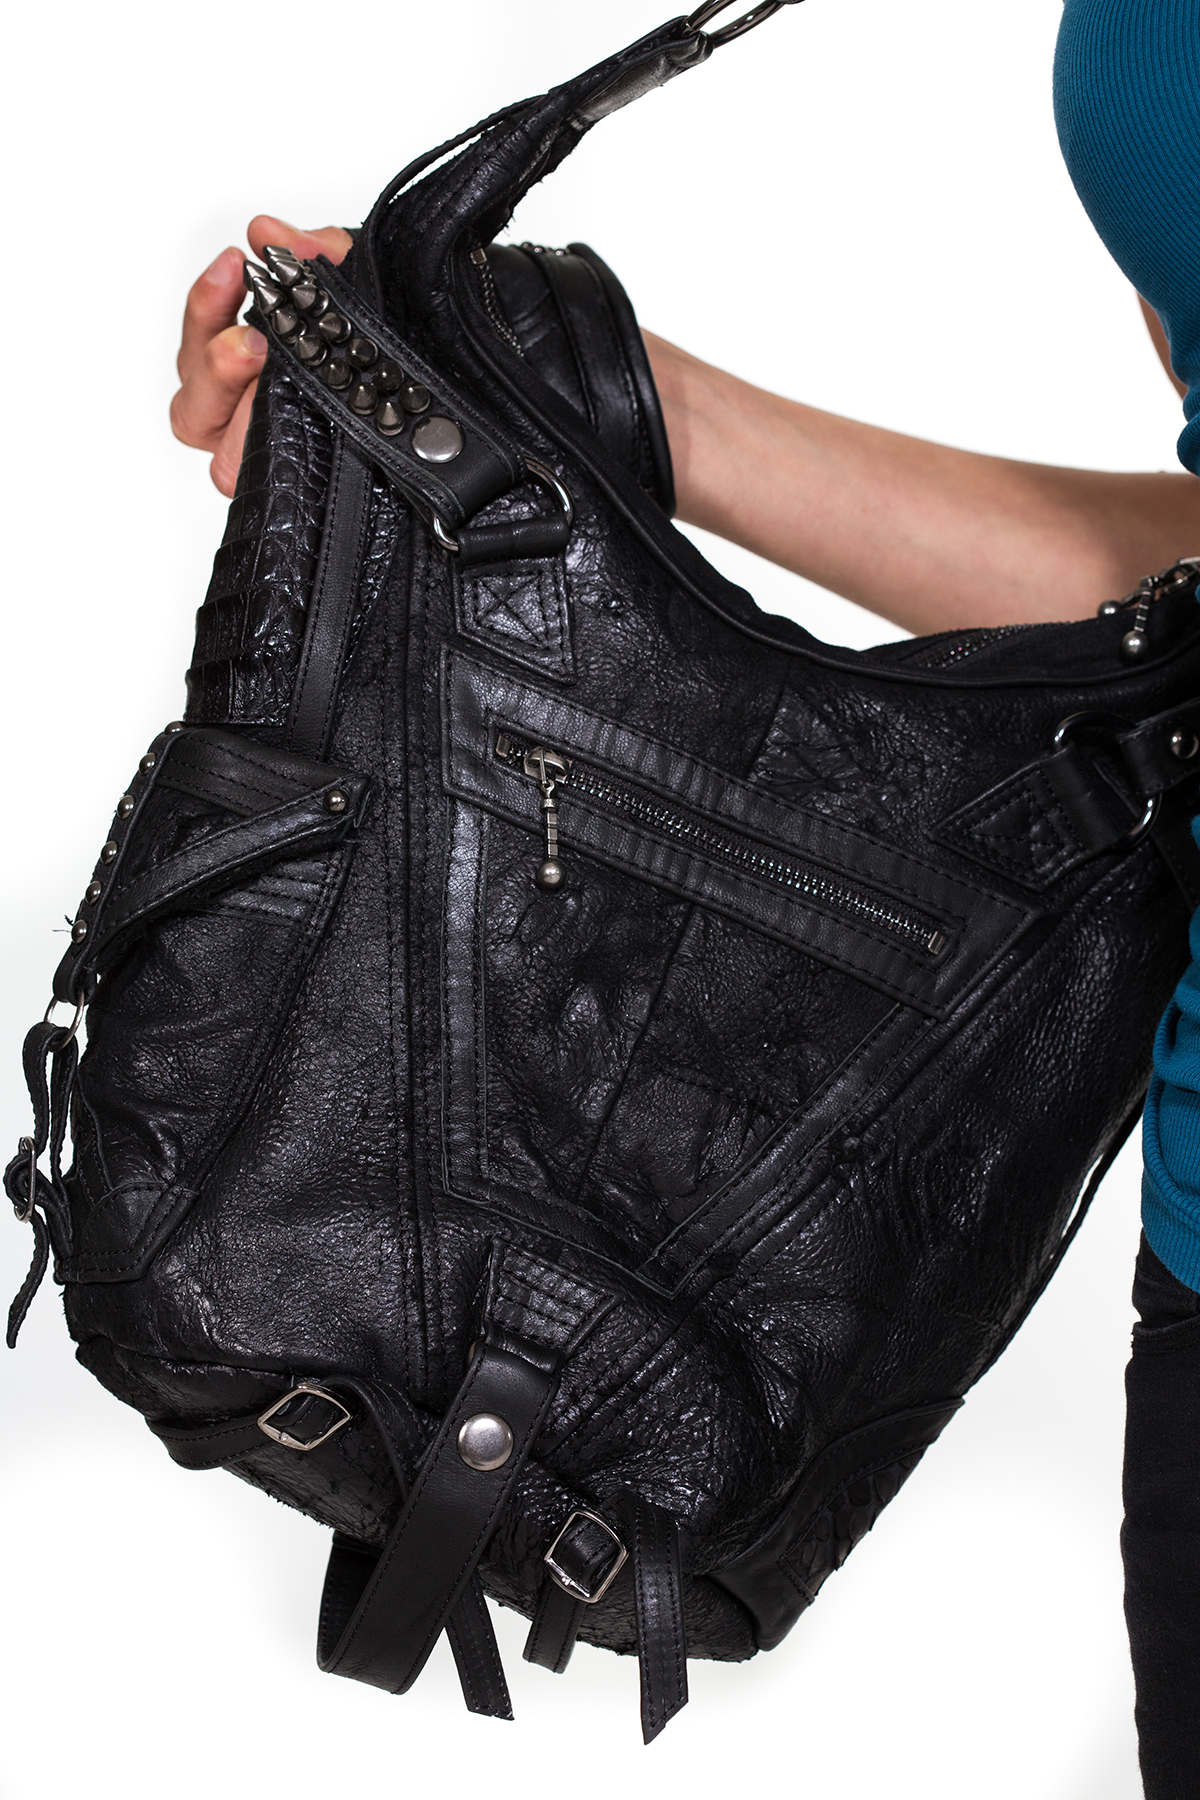 Mini RAGE CAGE Black Leather Hobo Shoulder Bag by Jungle Tribe